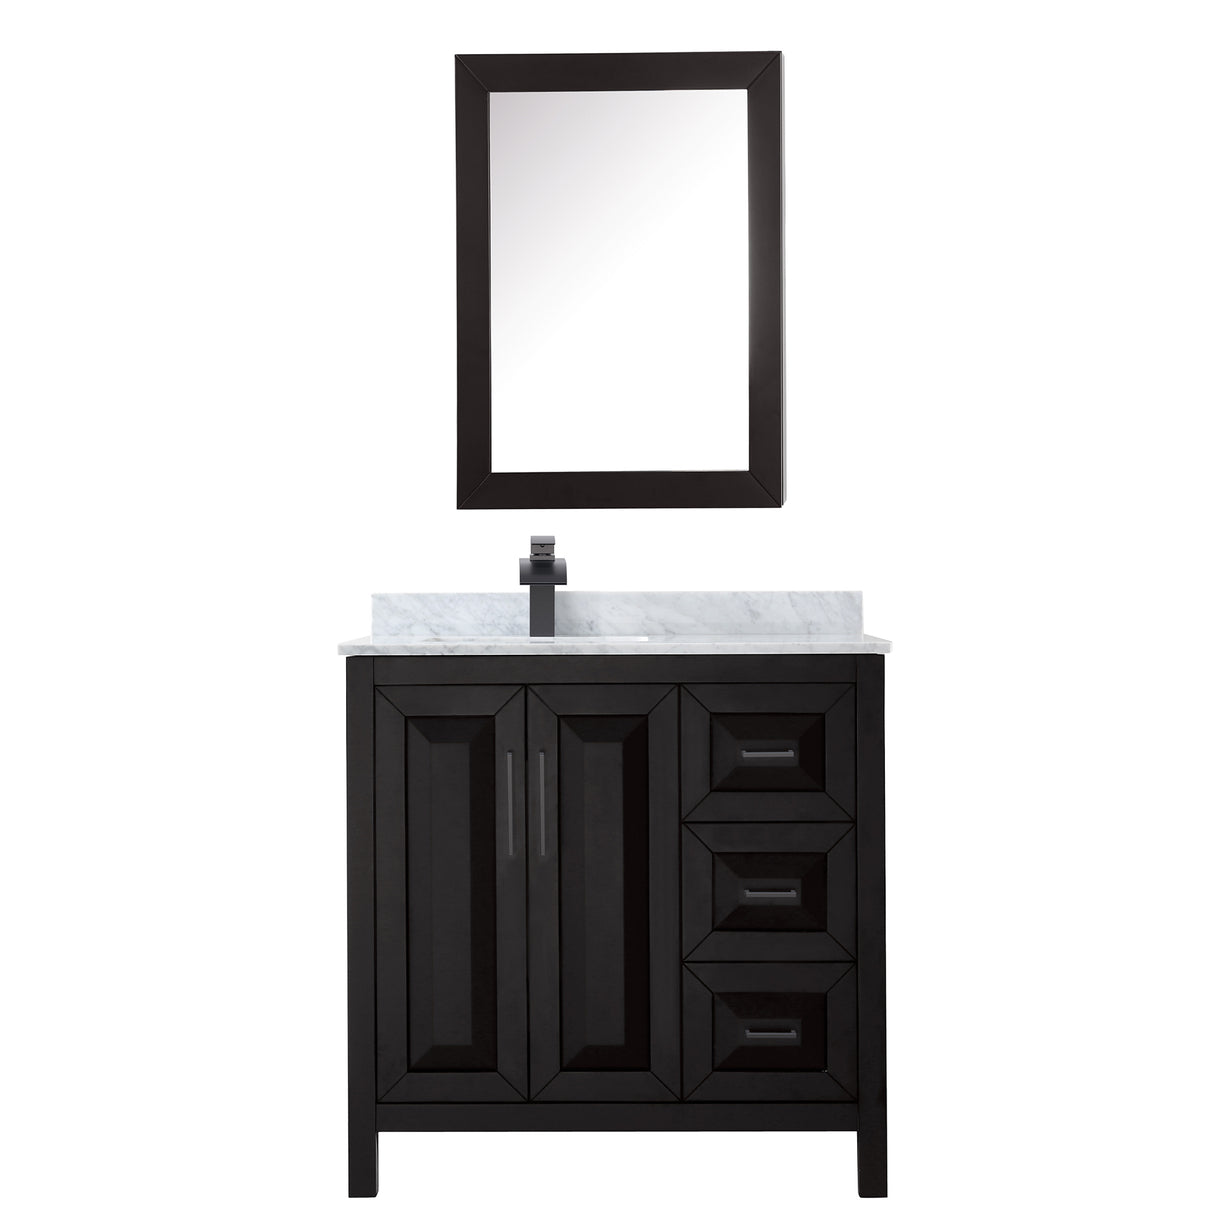 Daria 36 Inch Single Bathroom Vanity in Dark Espresso White Carrara Marble Countertop Undermount Square Sink Matte Black Trim Medicine Cabinet